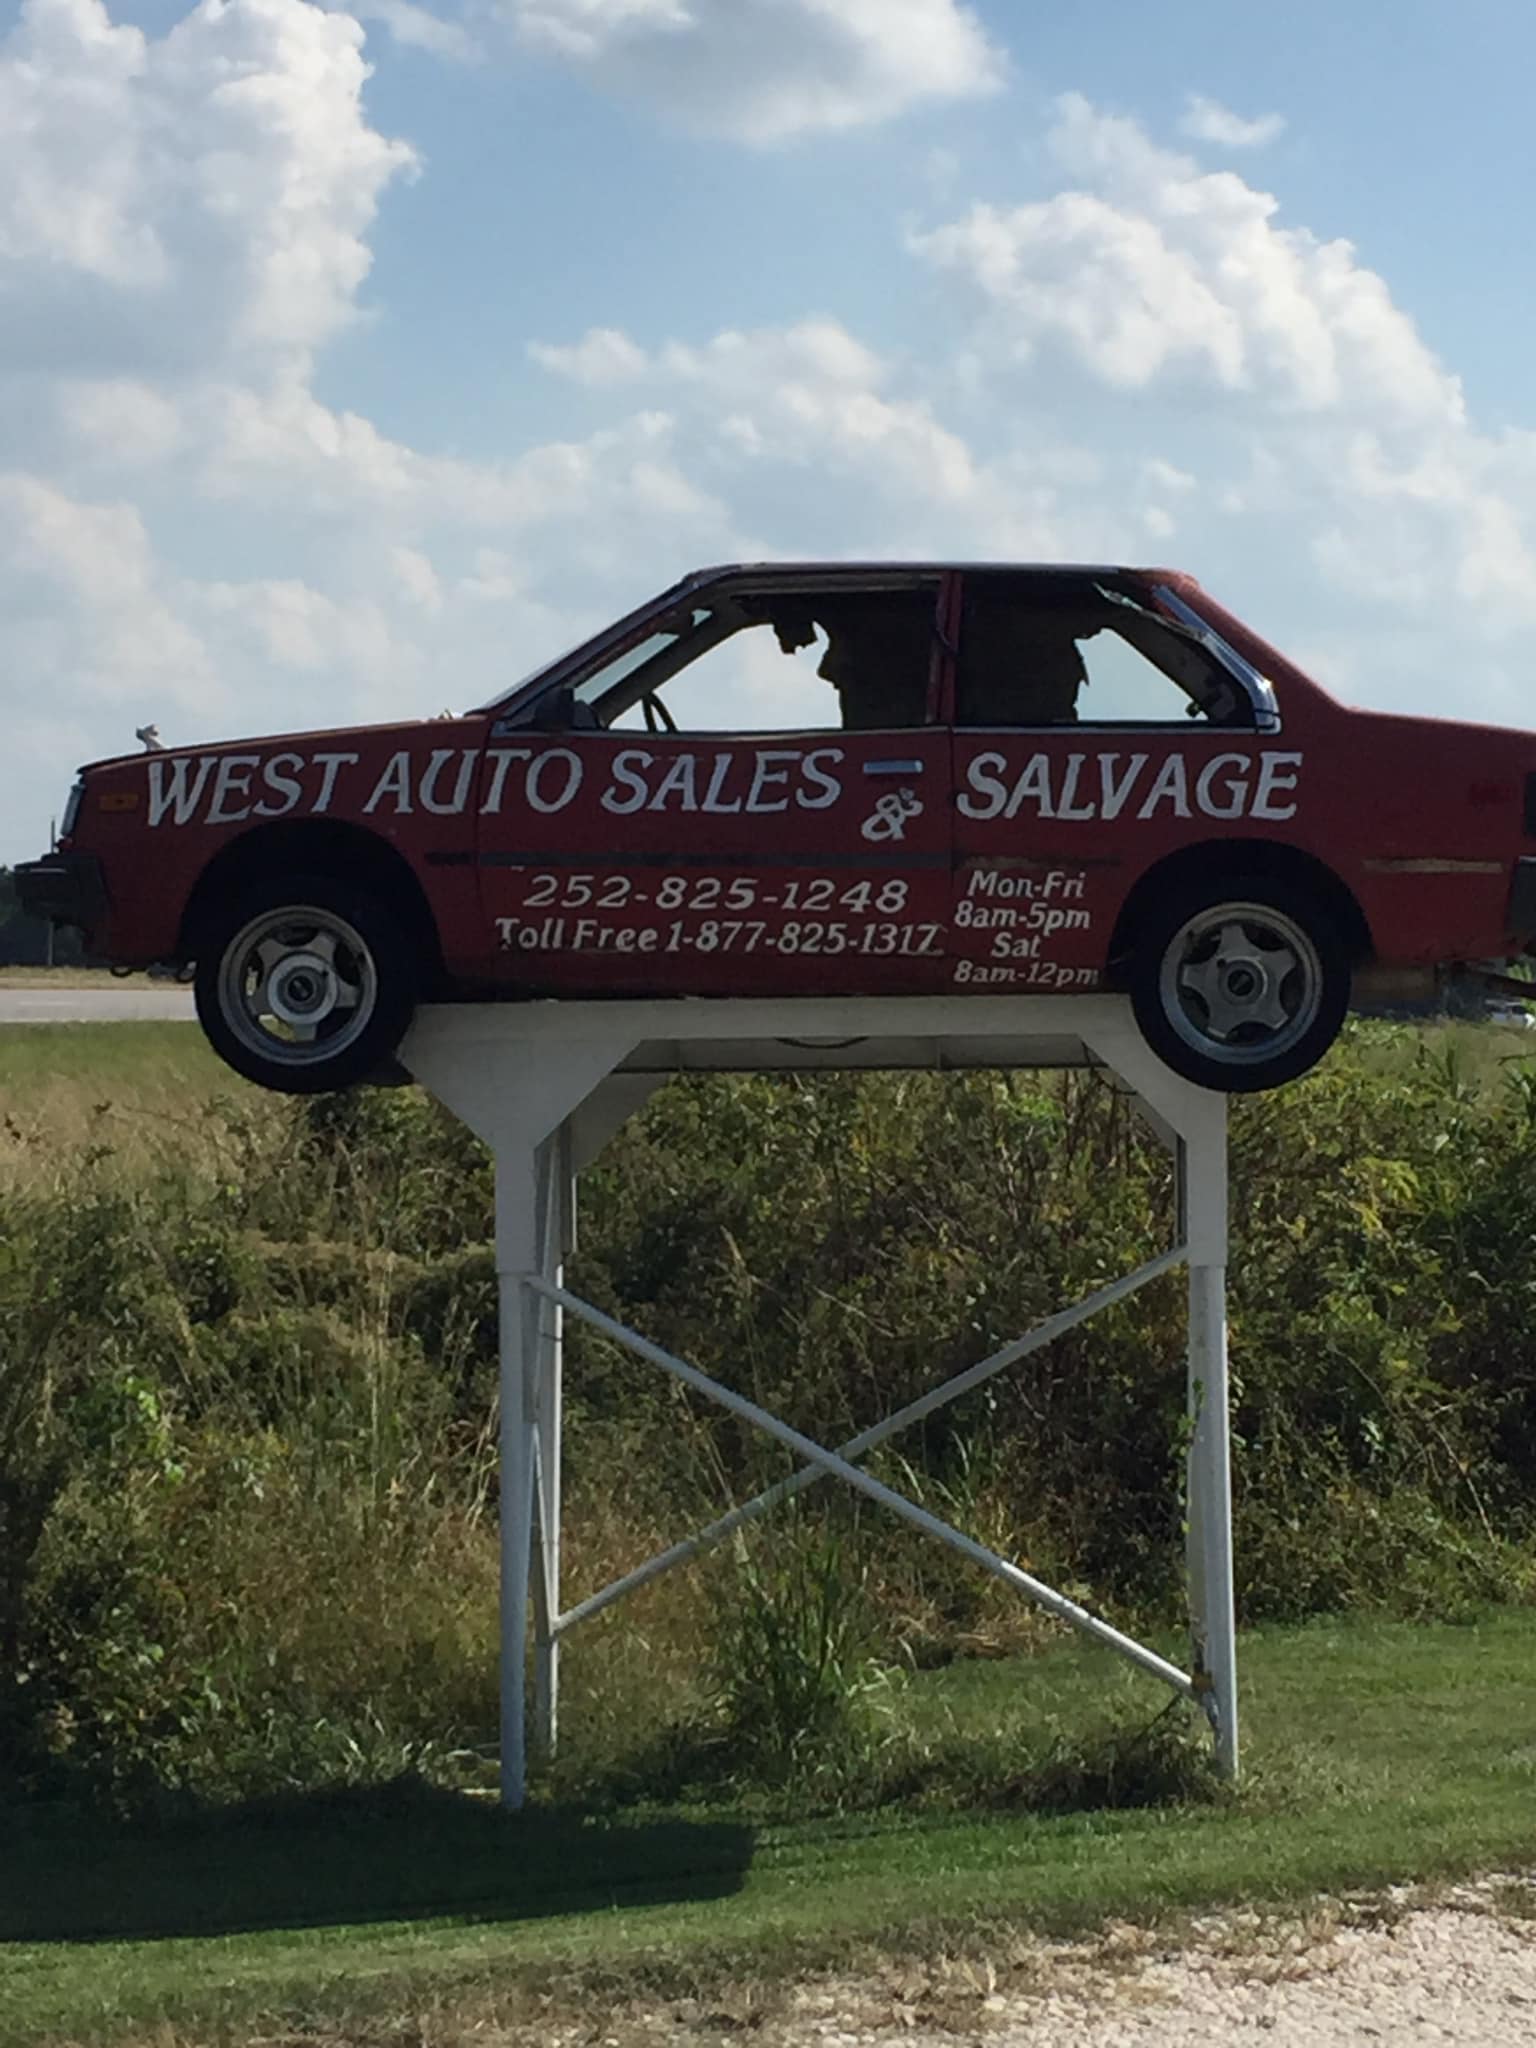 West Auto Sales & Salvage